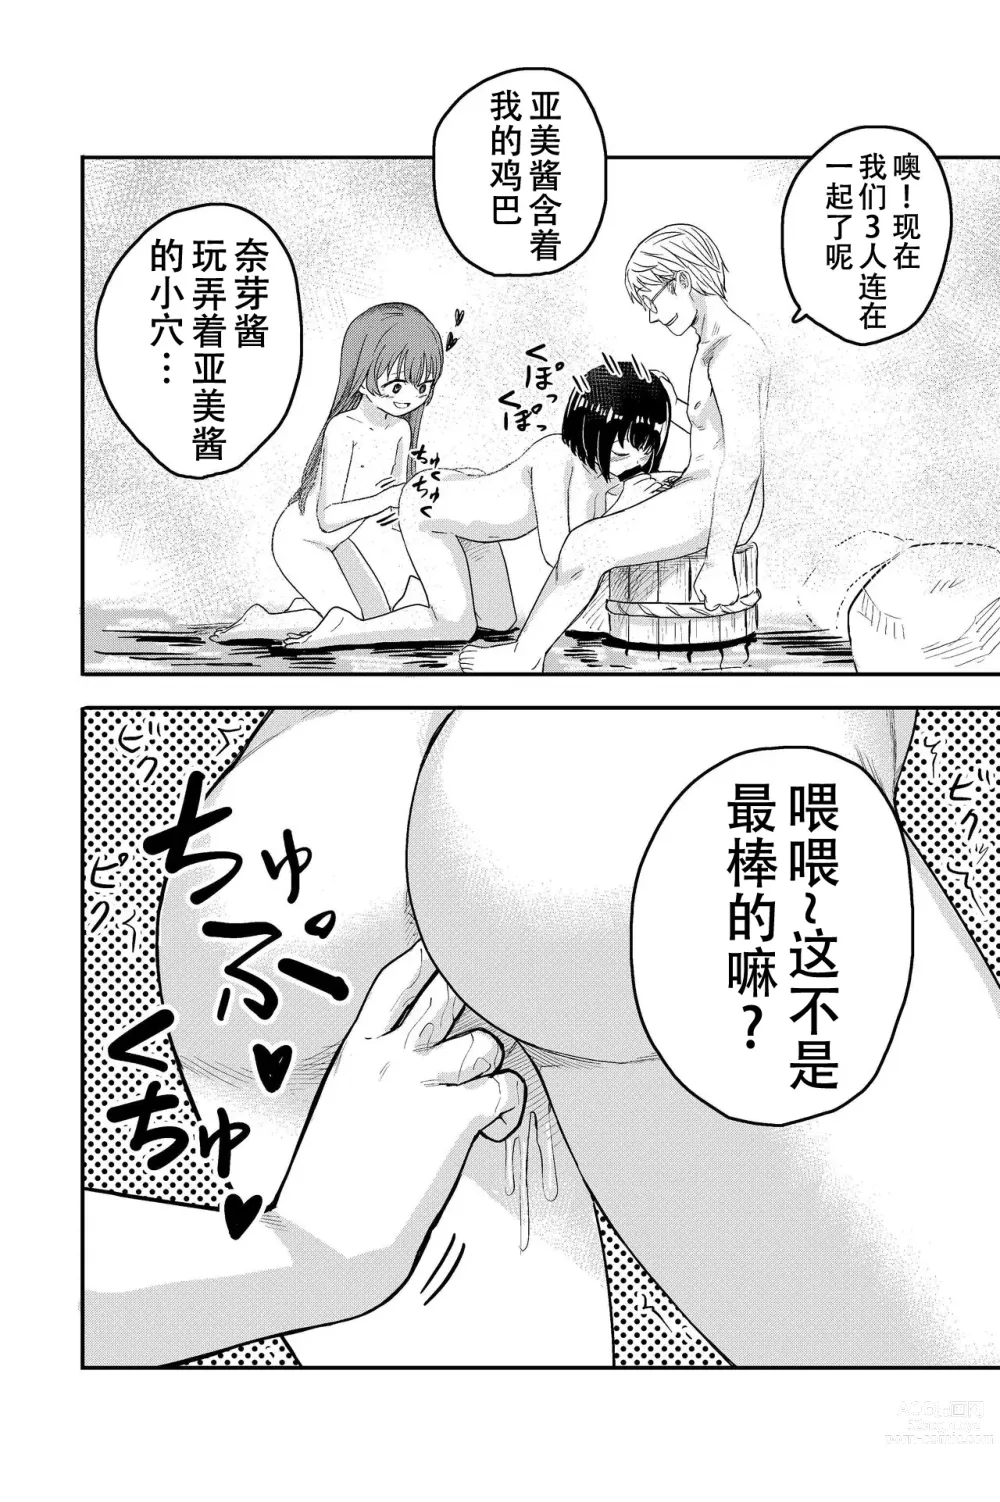 Page 21 of doujinshi Yuri no Ma Onsen e Youkoso